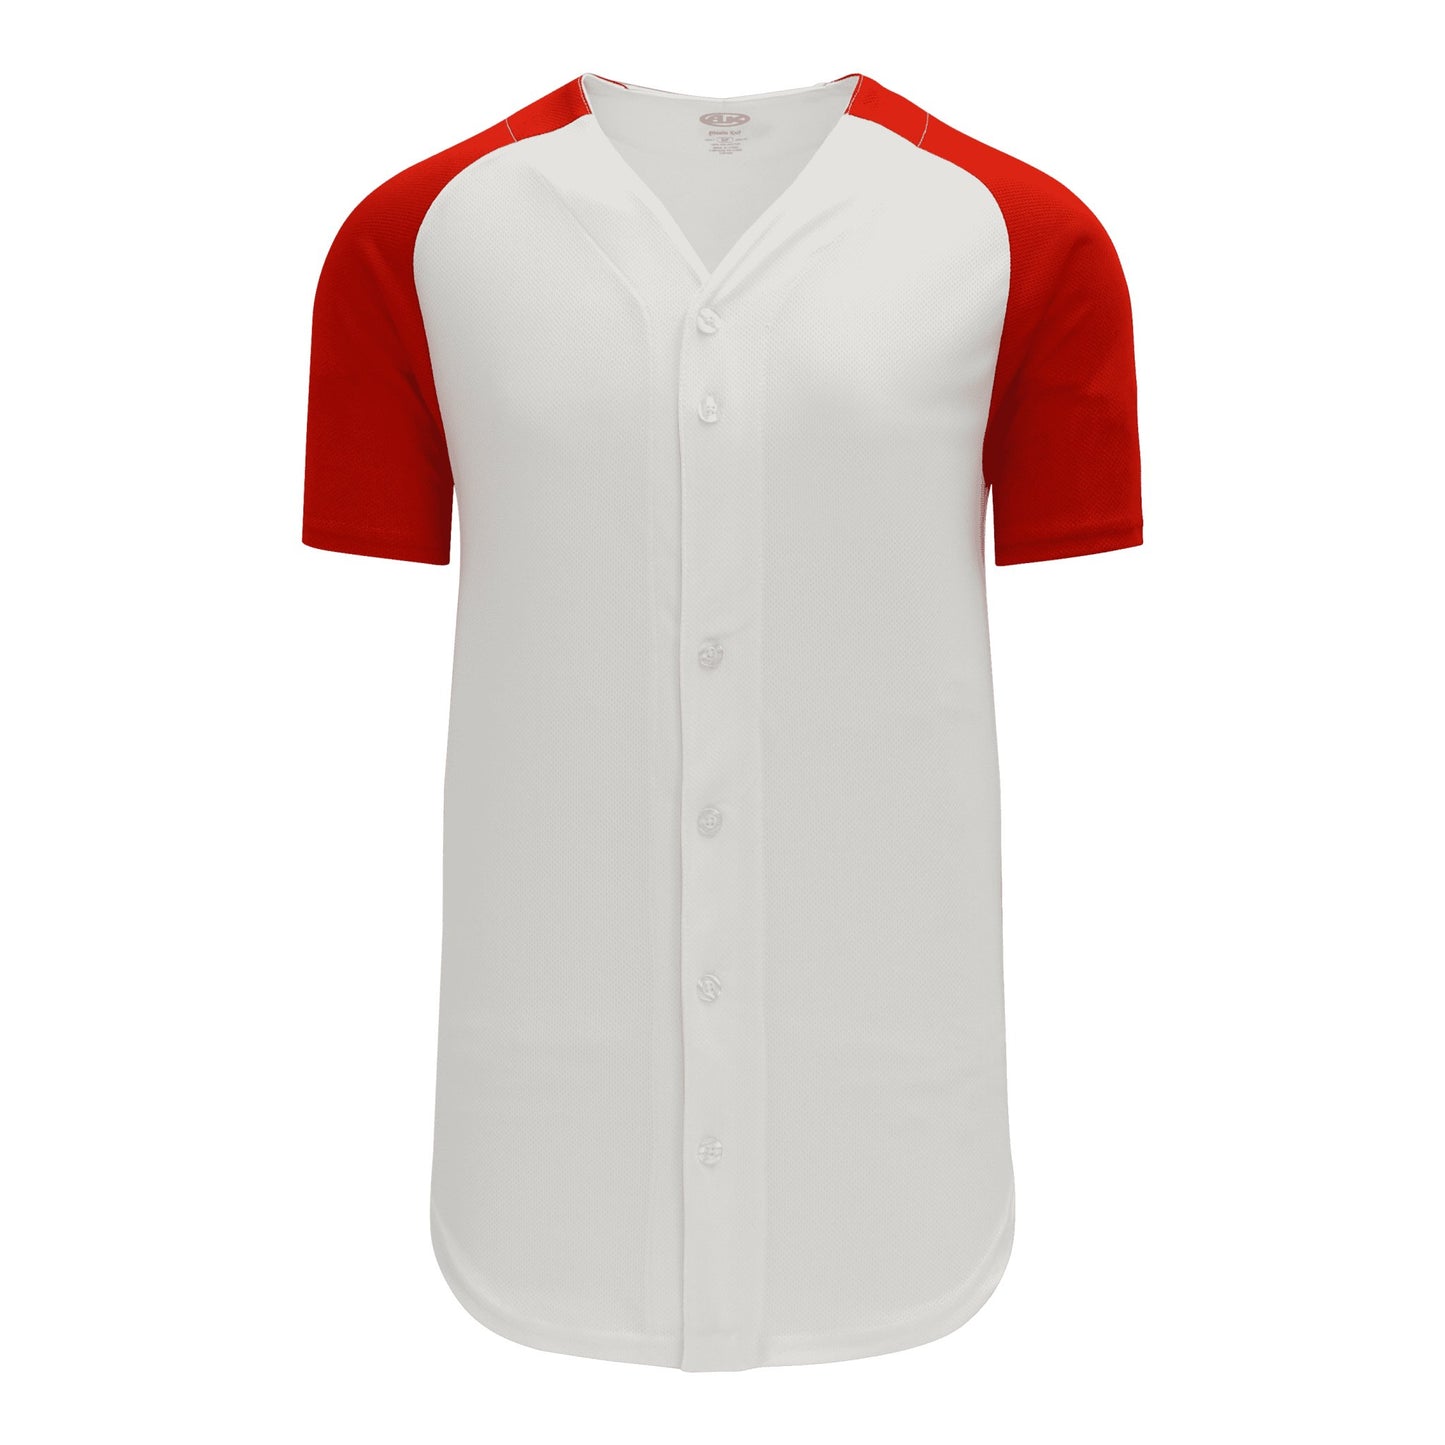 Full Button Baseball Jerseys: Team Patterns 2, Youth Cut